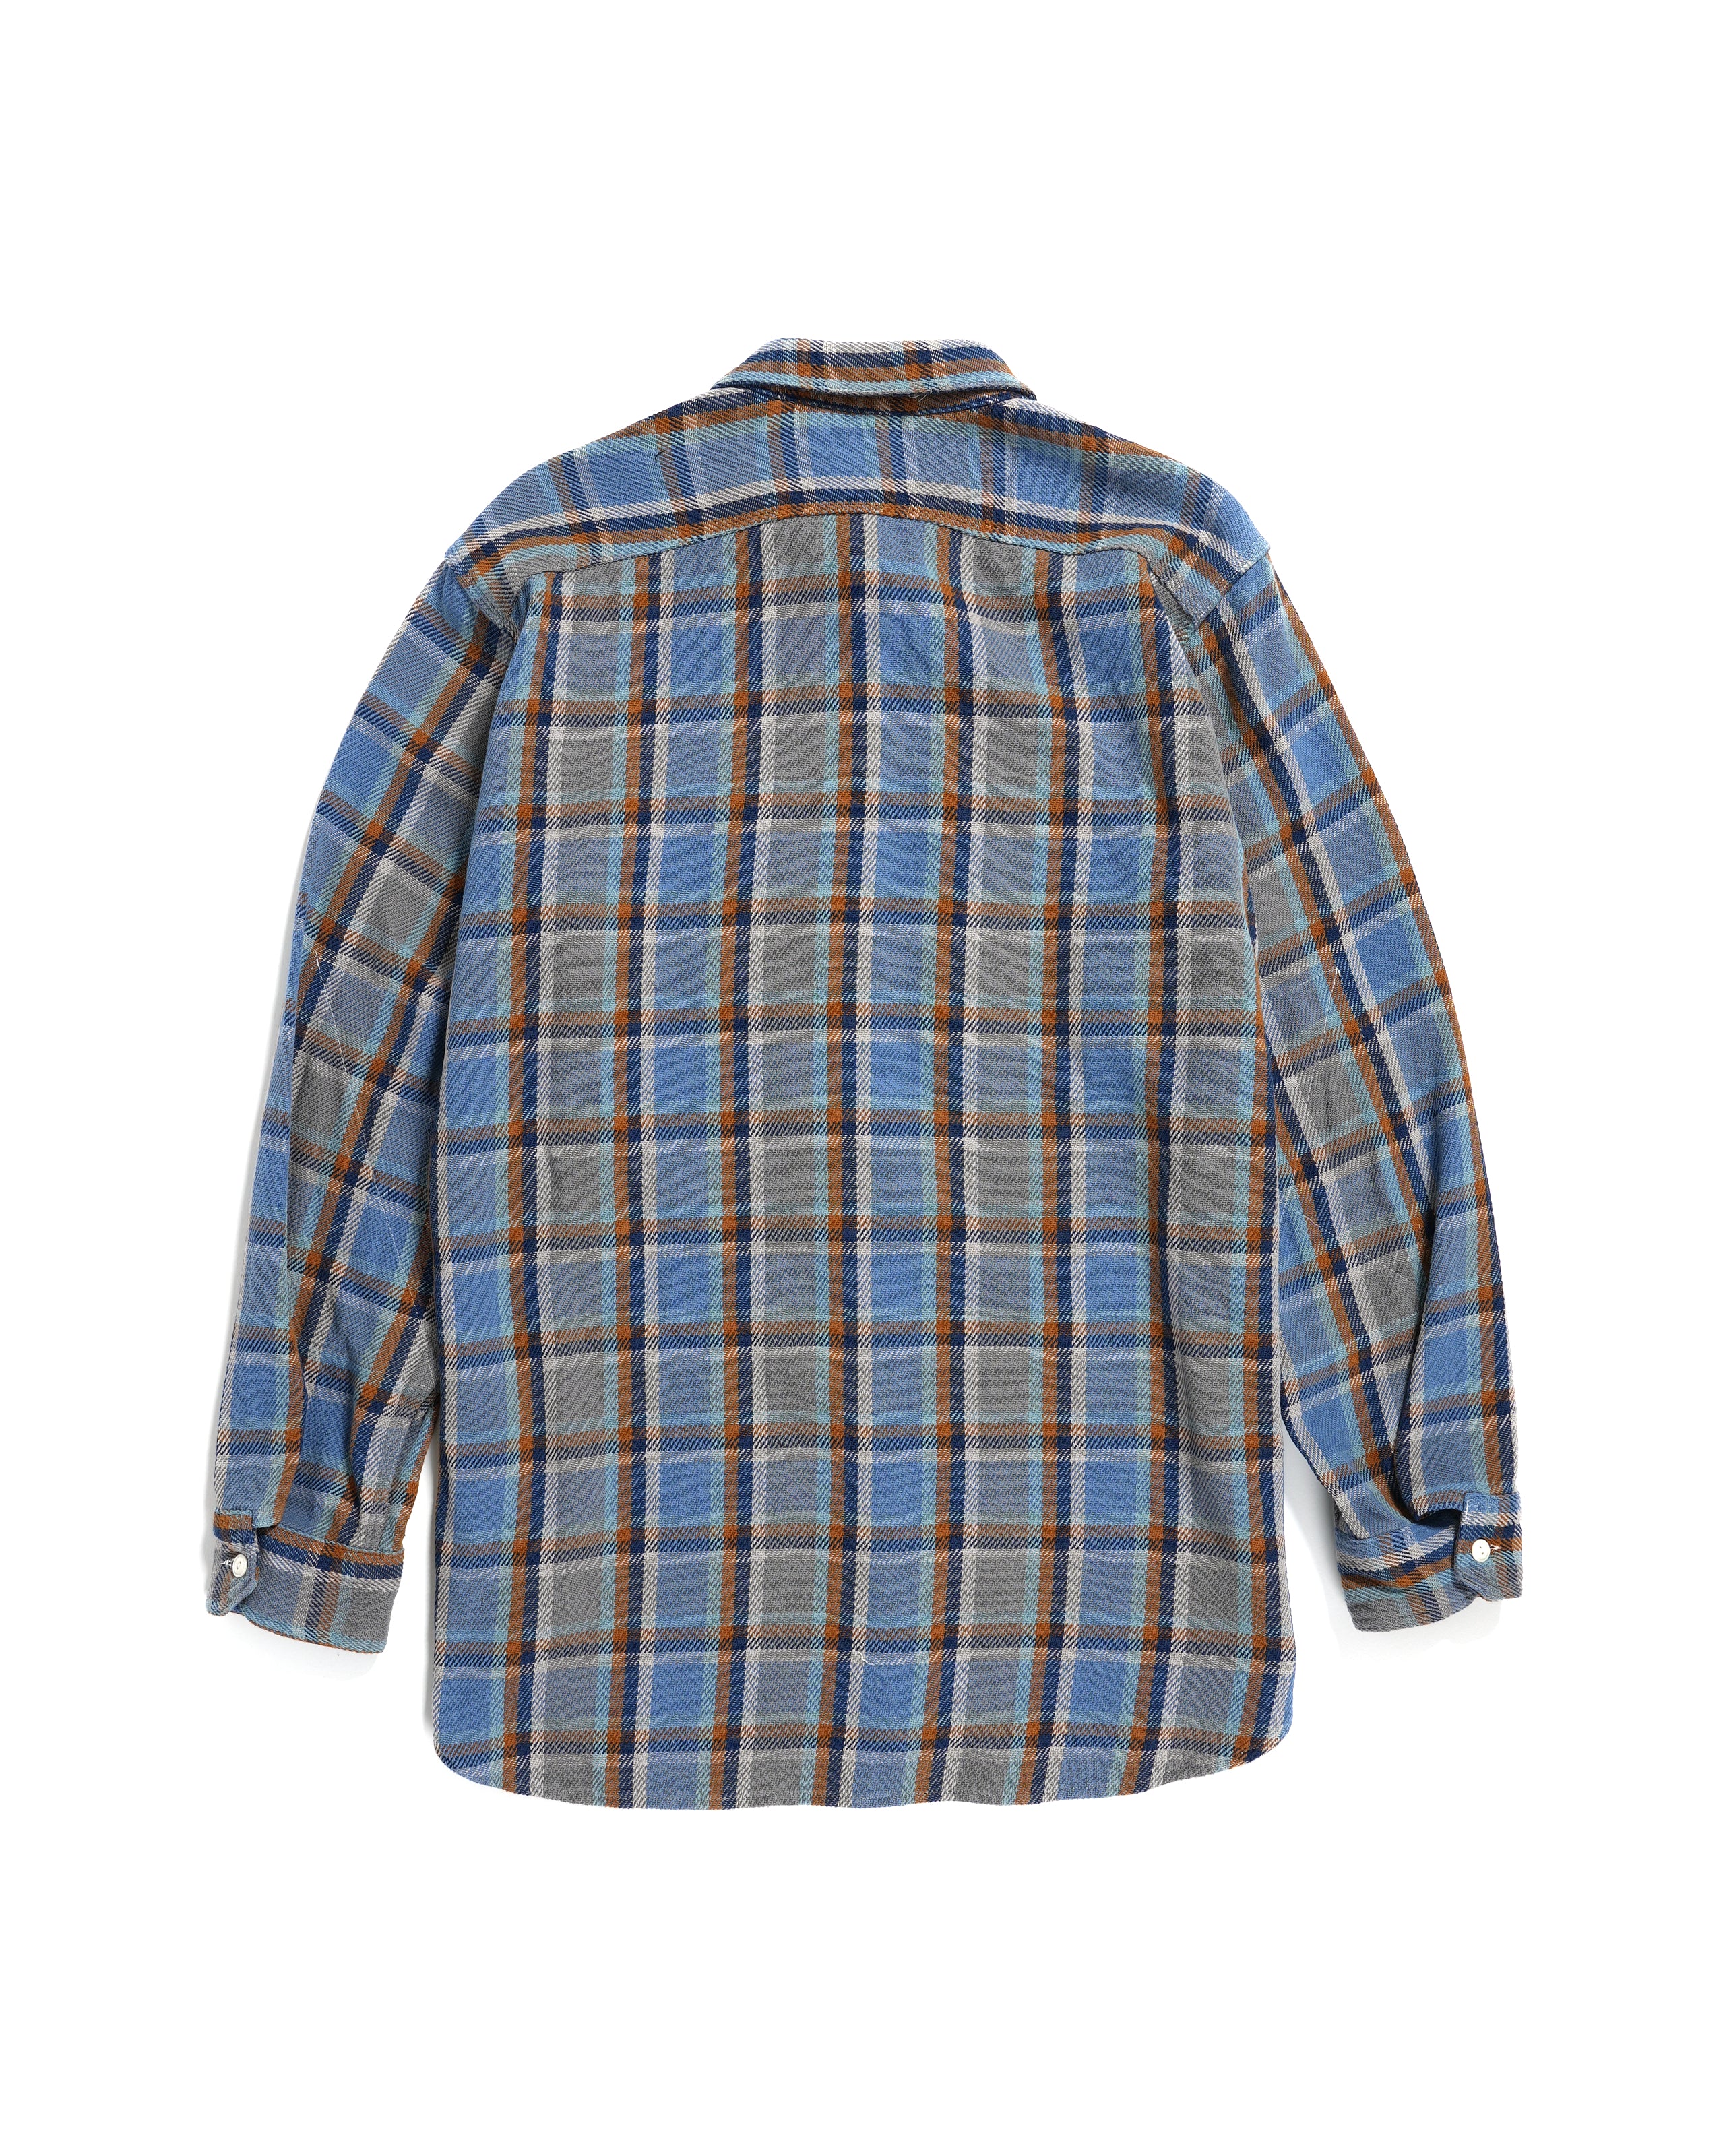 Engineered Garments Work Shirt - Blue Cotton Heavy Twill Plaid